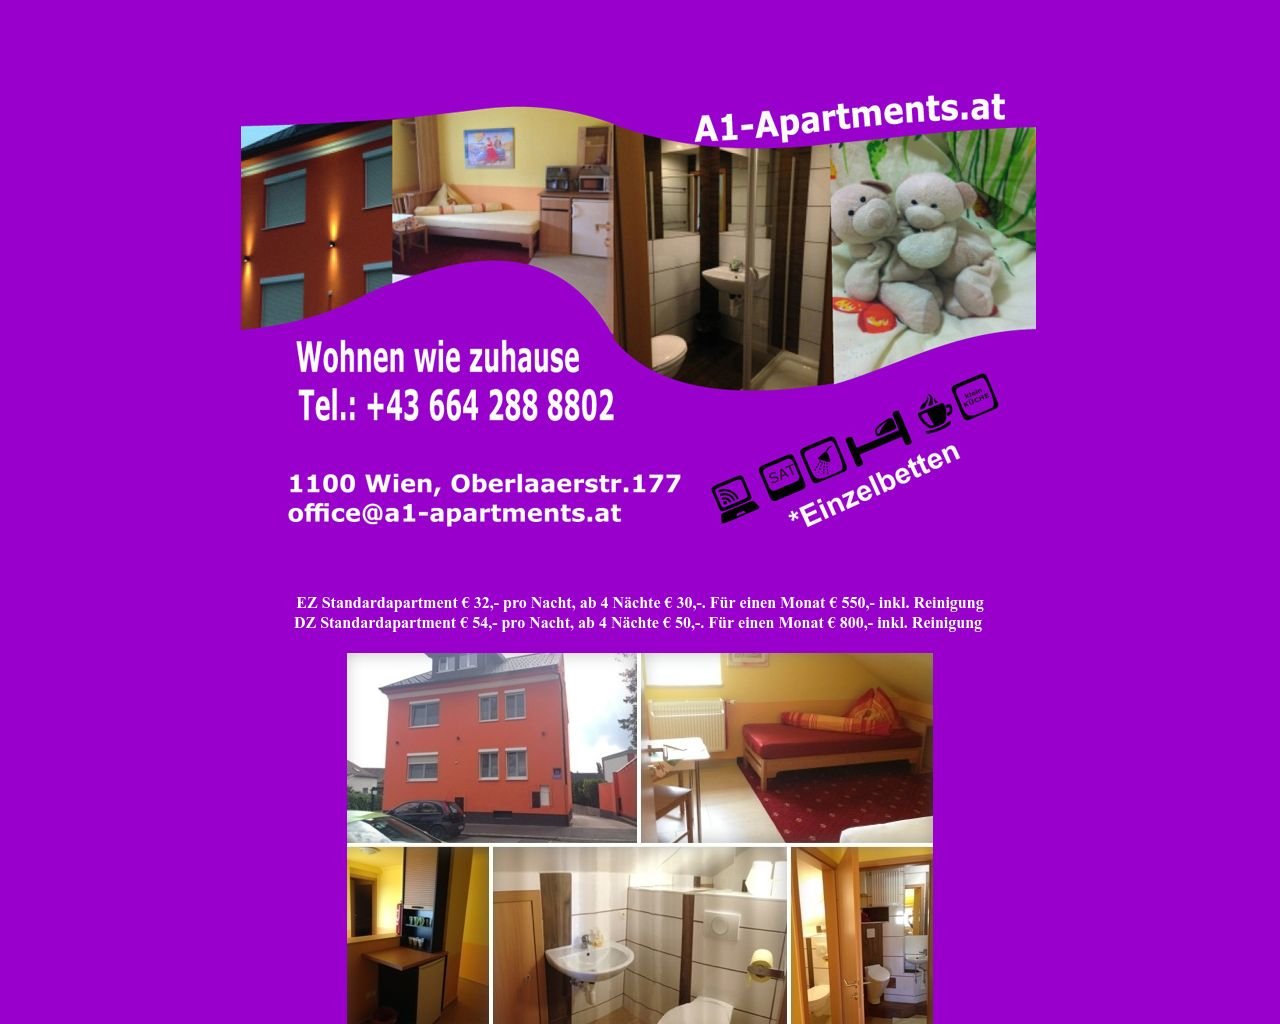 Bild Website a1-apartments.at in 1280x1024